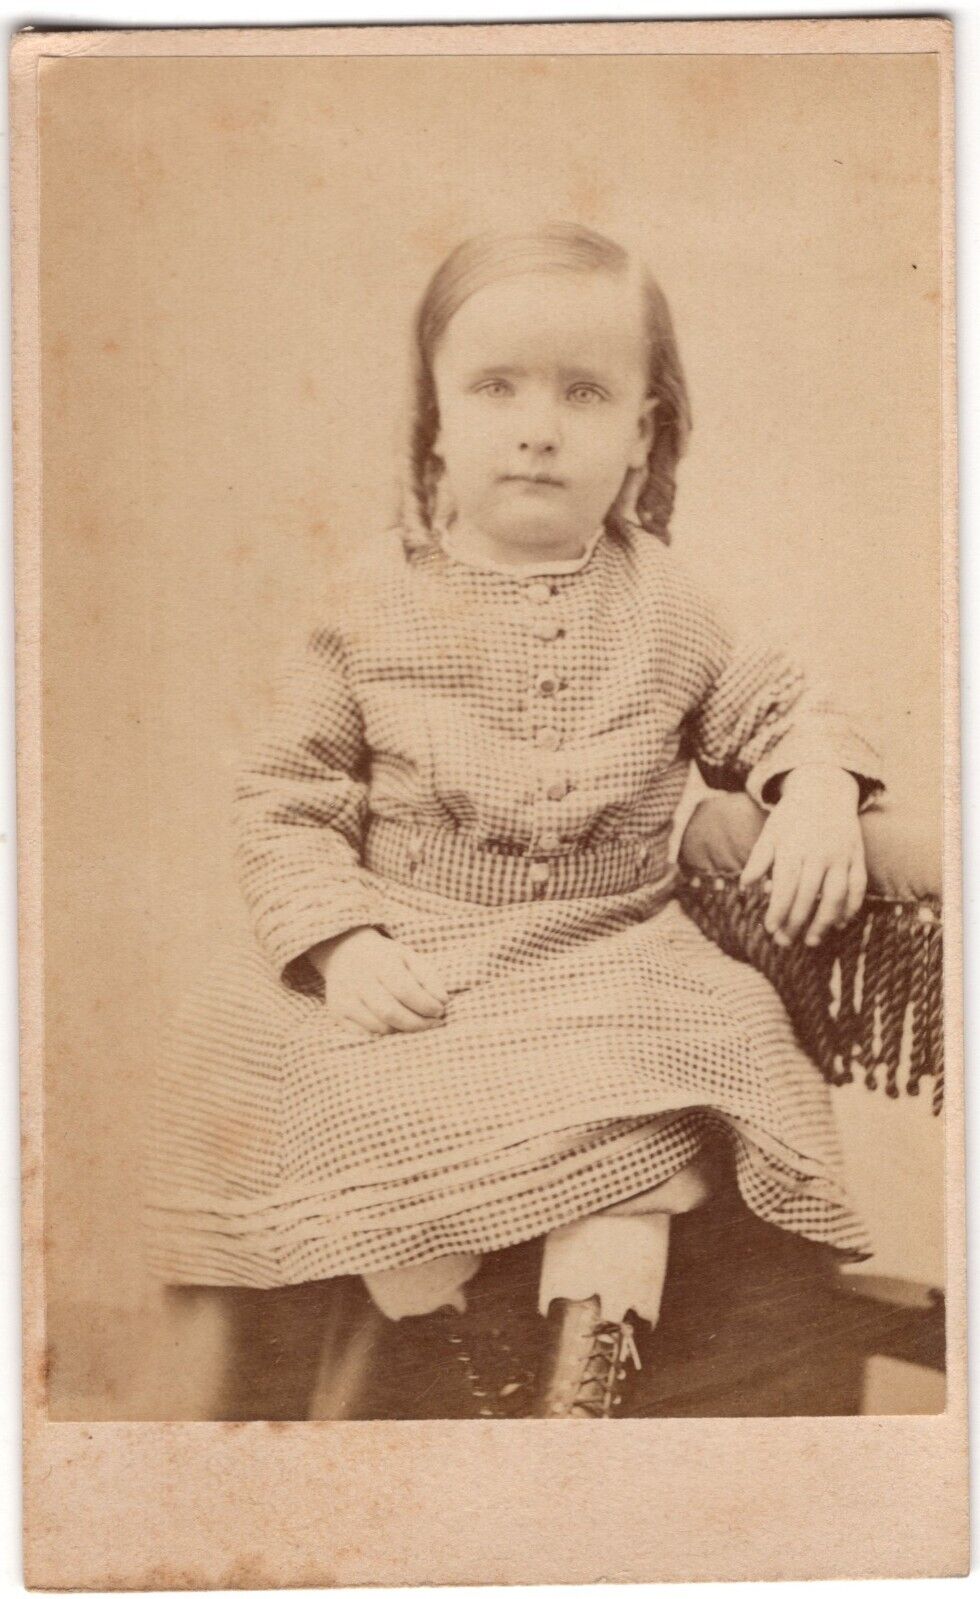 CIRCA 1870s CDV M.F. KING LITTLE GIRL IN DRESS PORTLAND MAINE